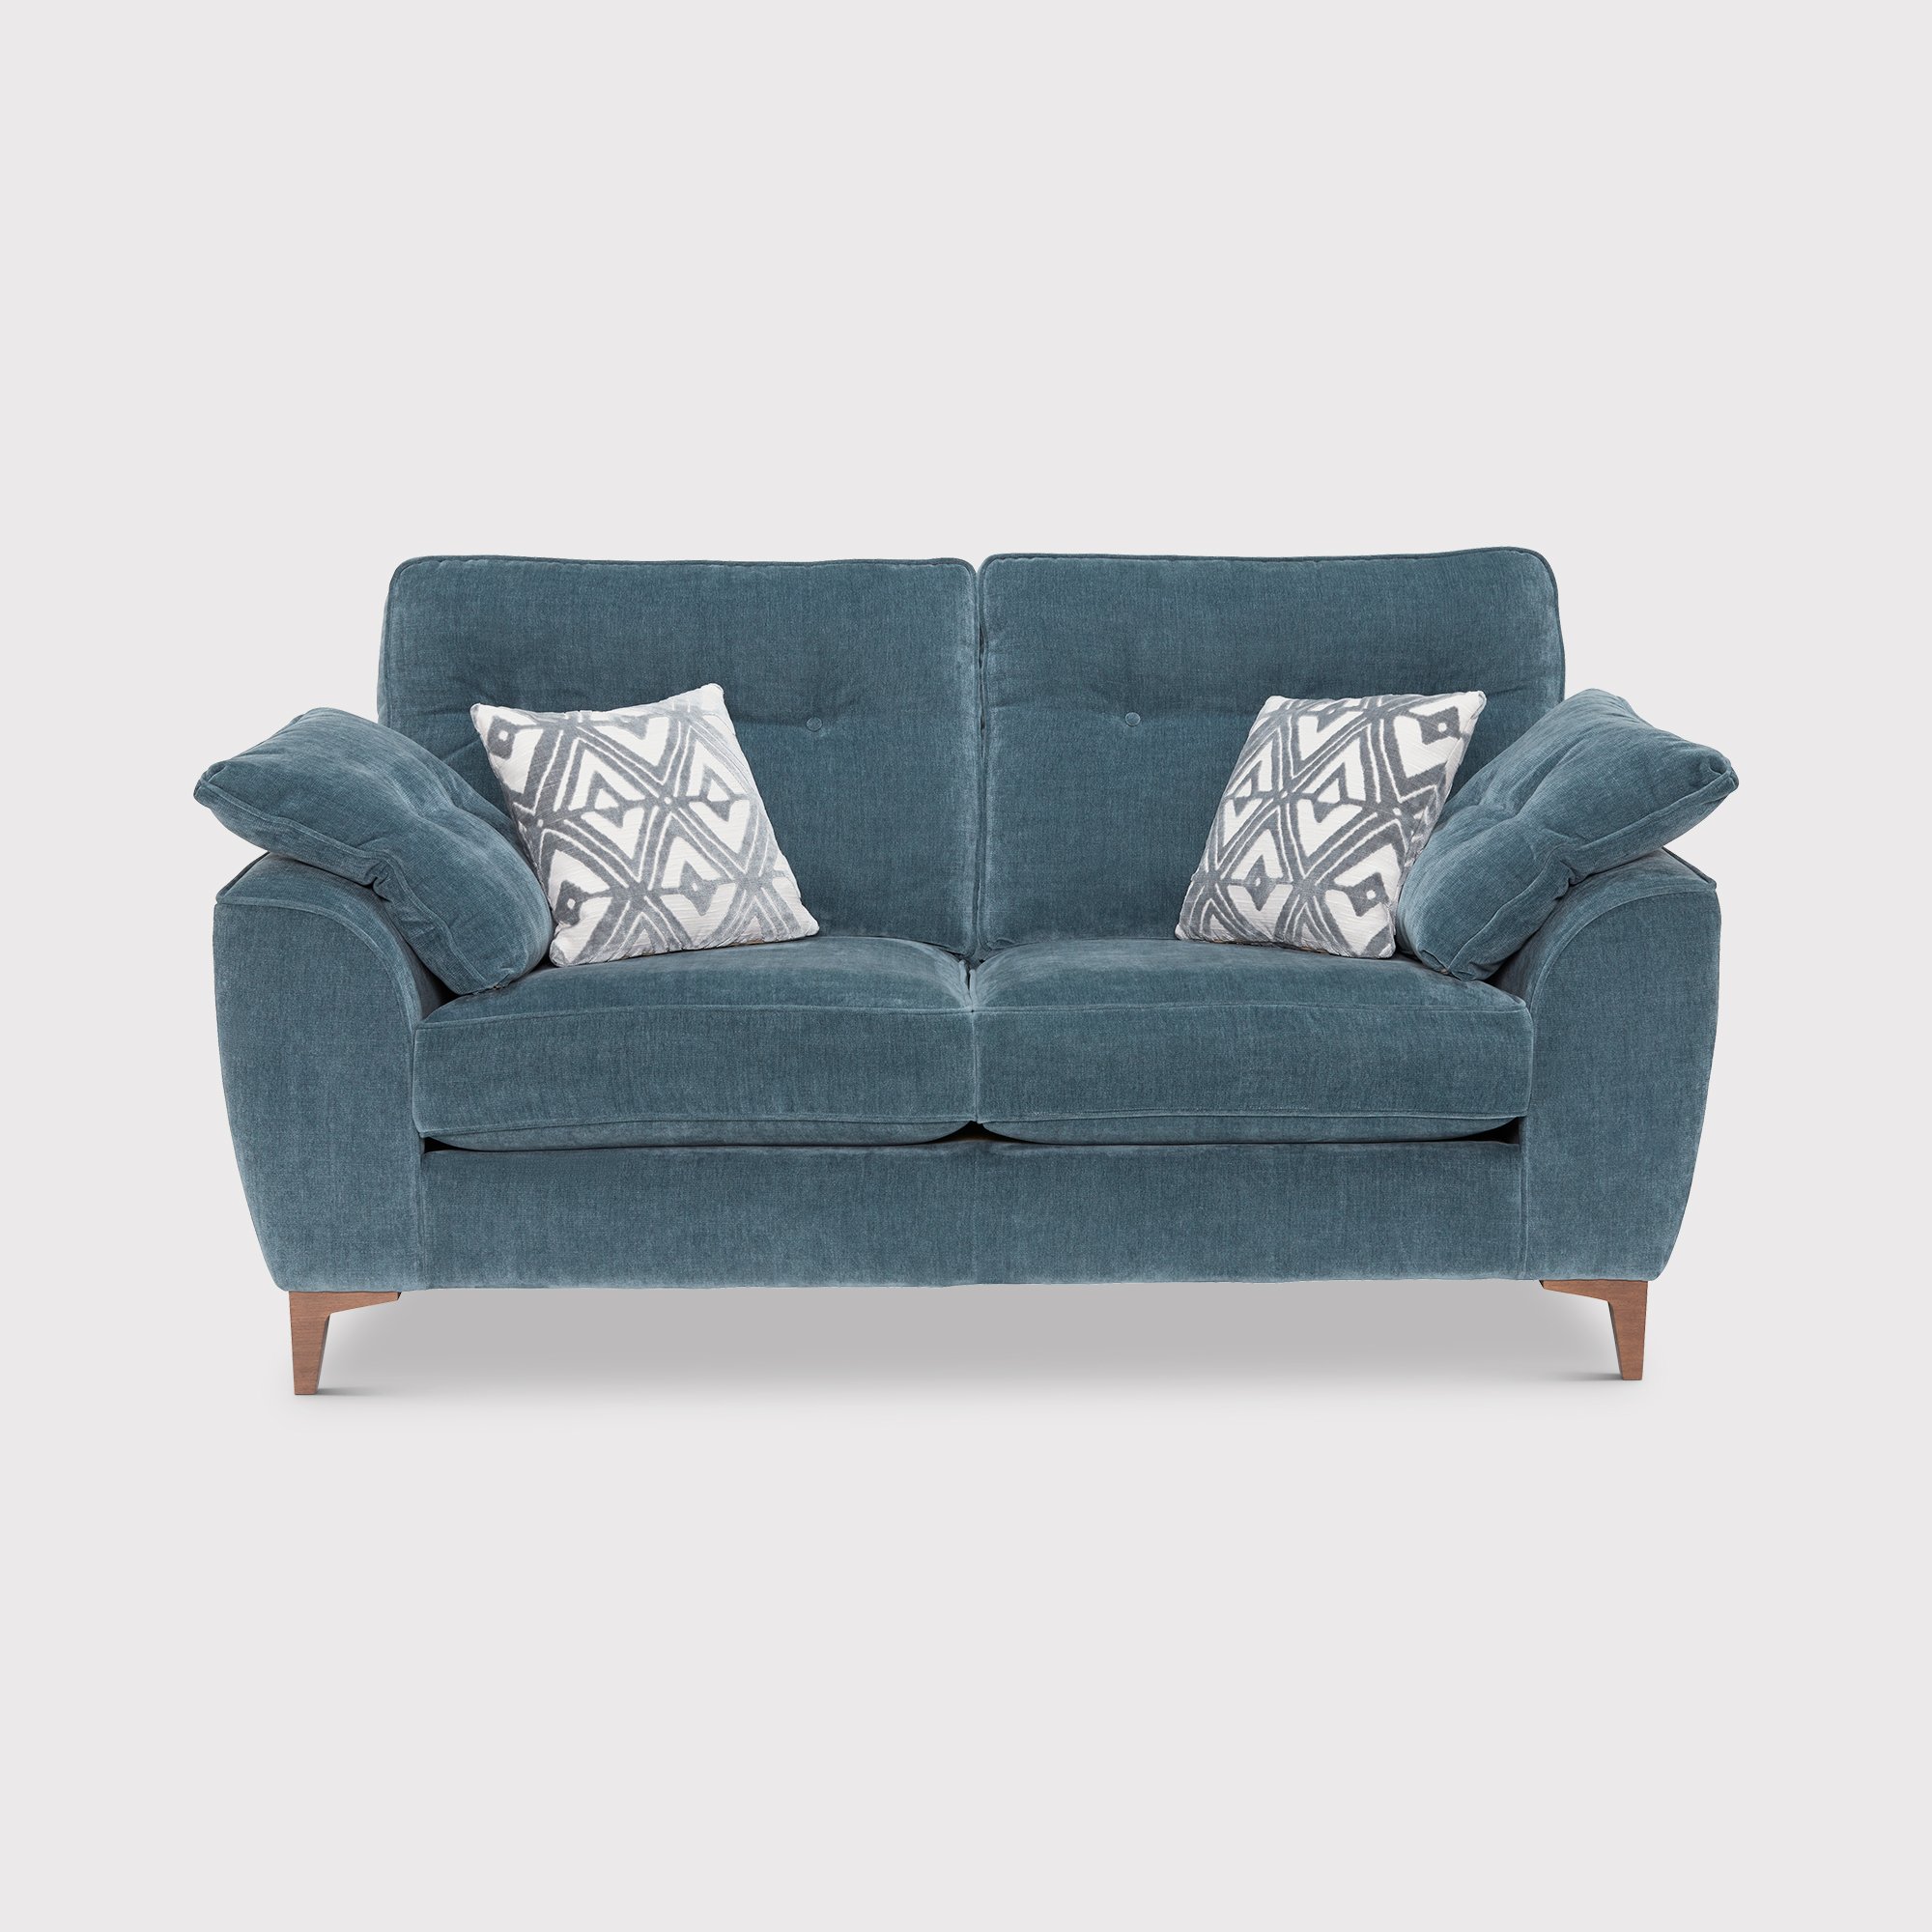 Dandridge 2 Seater Sofa, Blue Fabric | Barker & Stonehouse